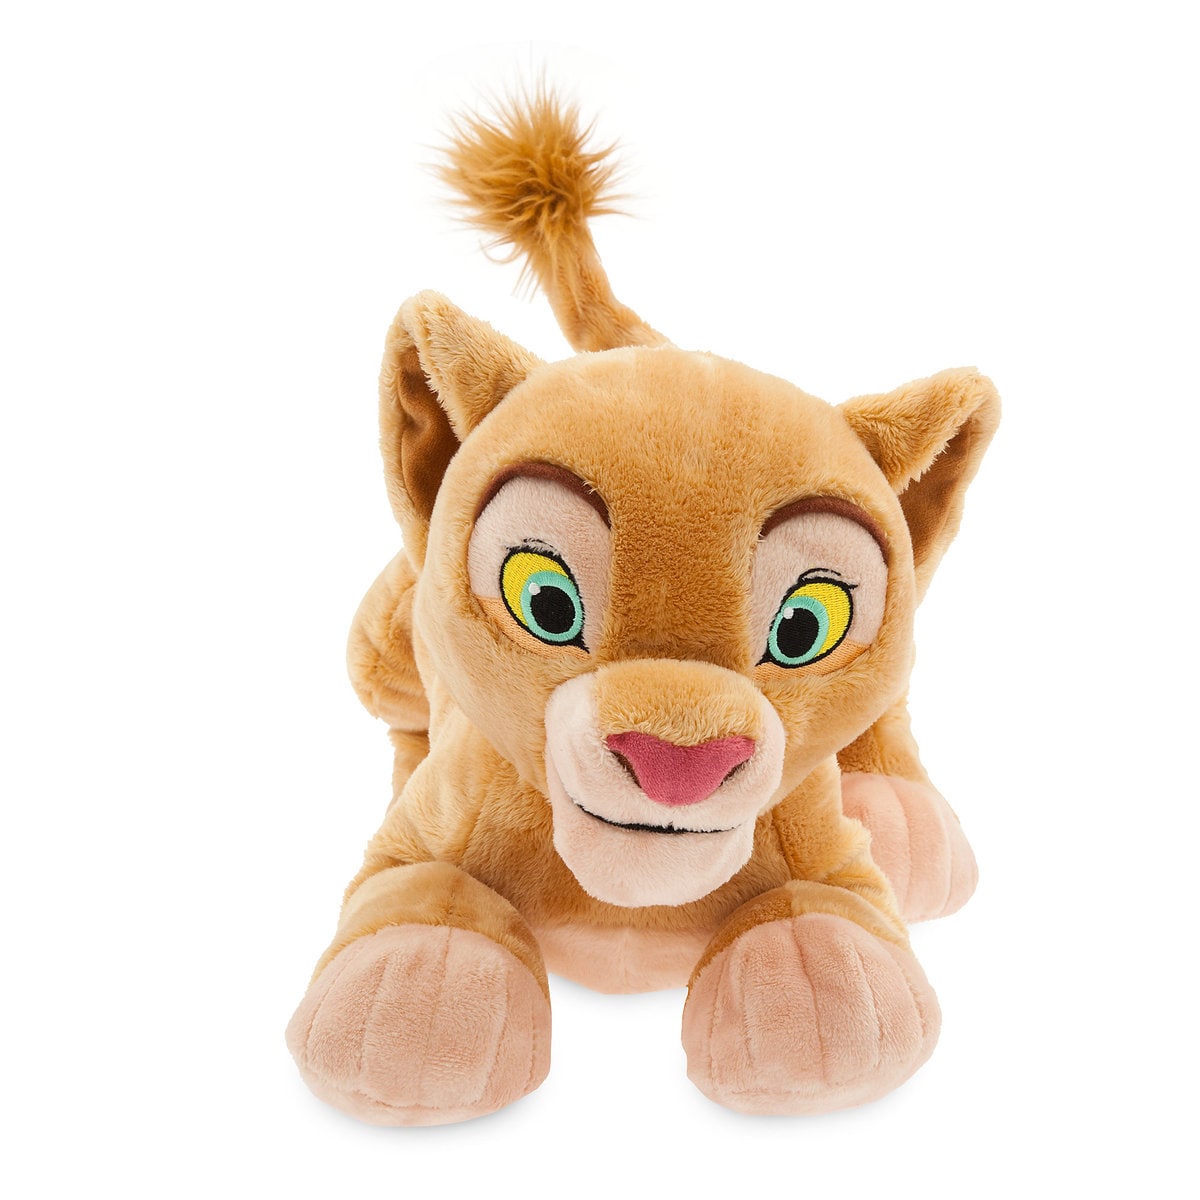 Disney Store Nala The Lion King Medium Plush New with Tags